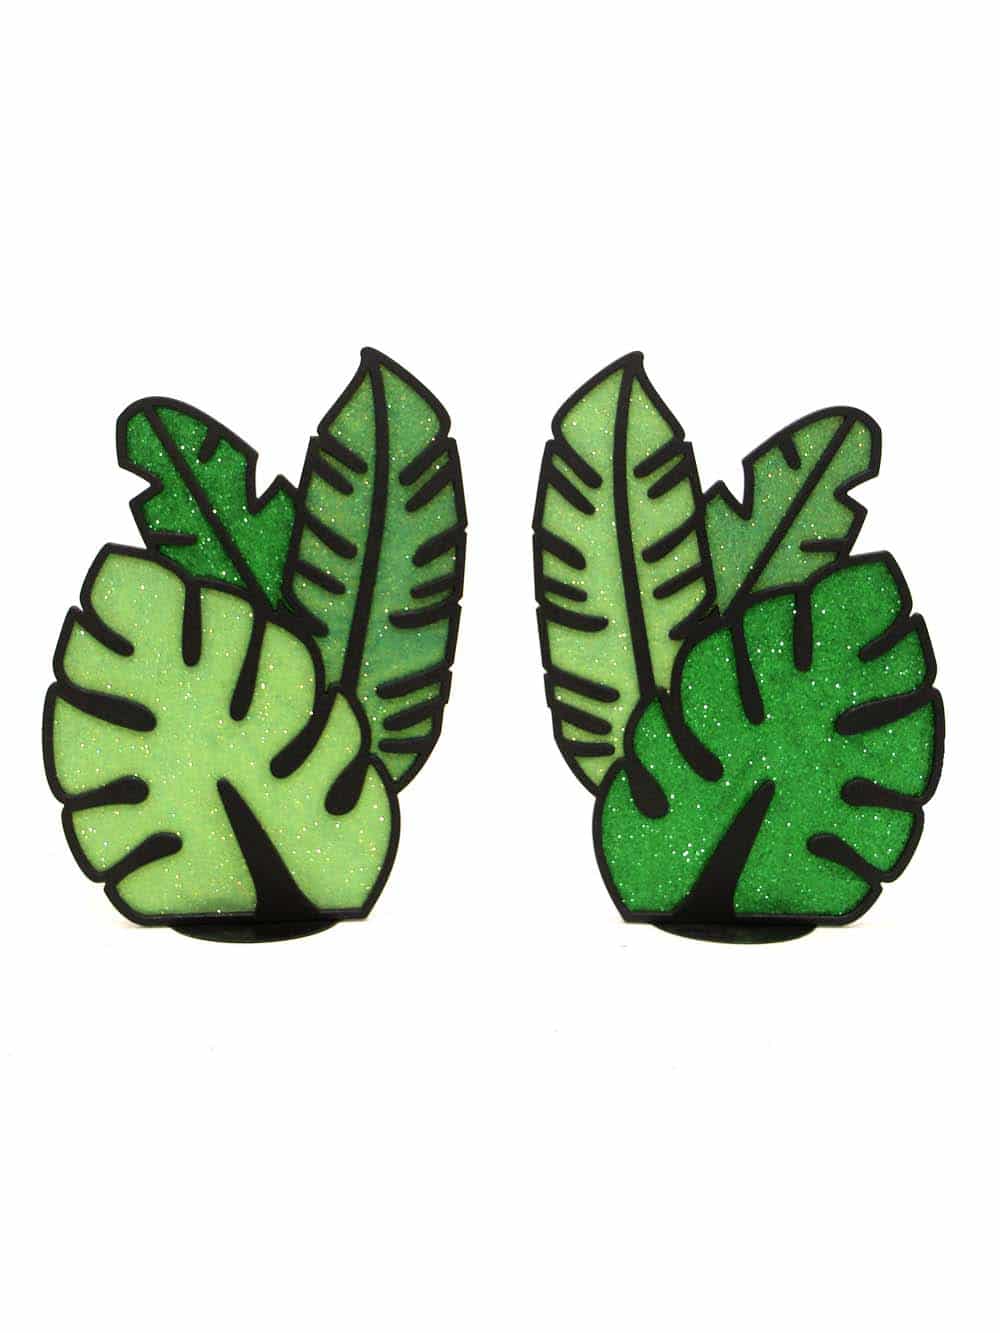 Jungle Leaf Set - LHS Large (Green)